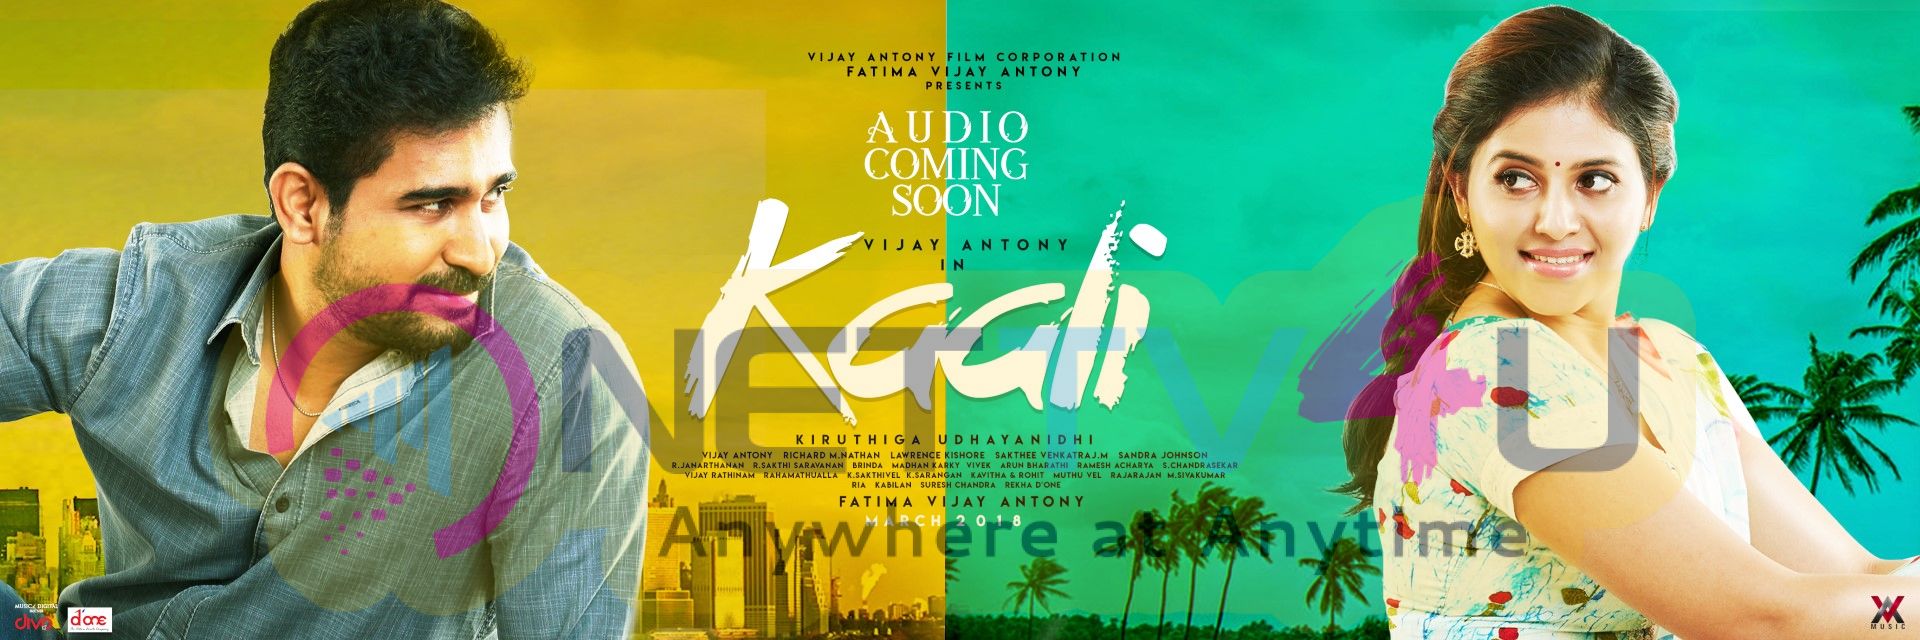 Kaali Movie Posters Tamil Gallery